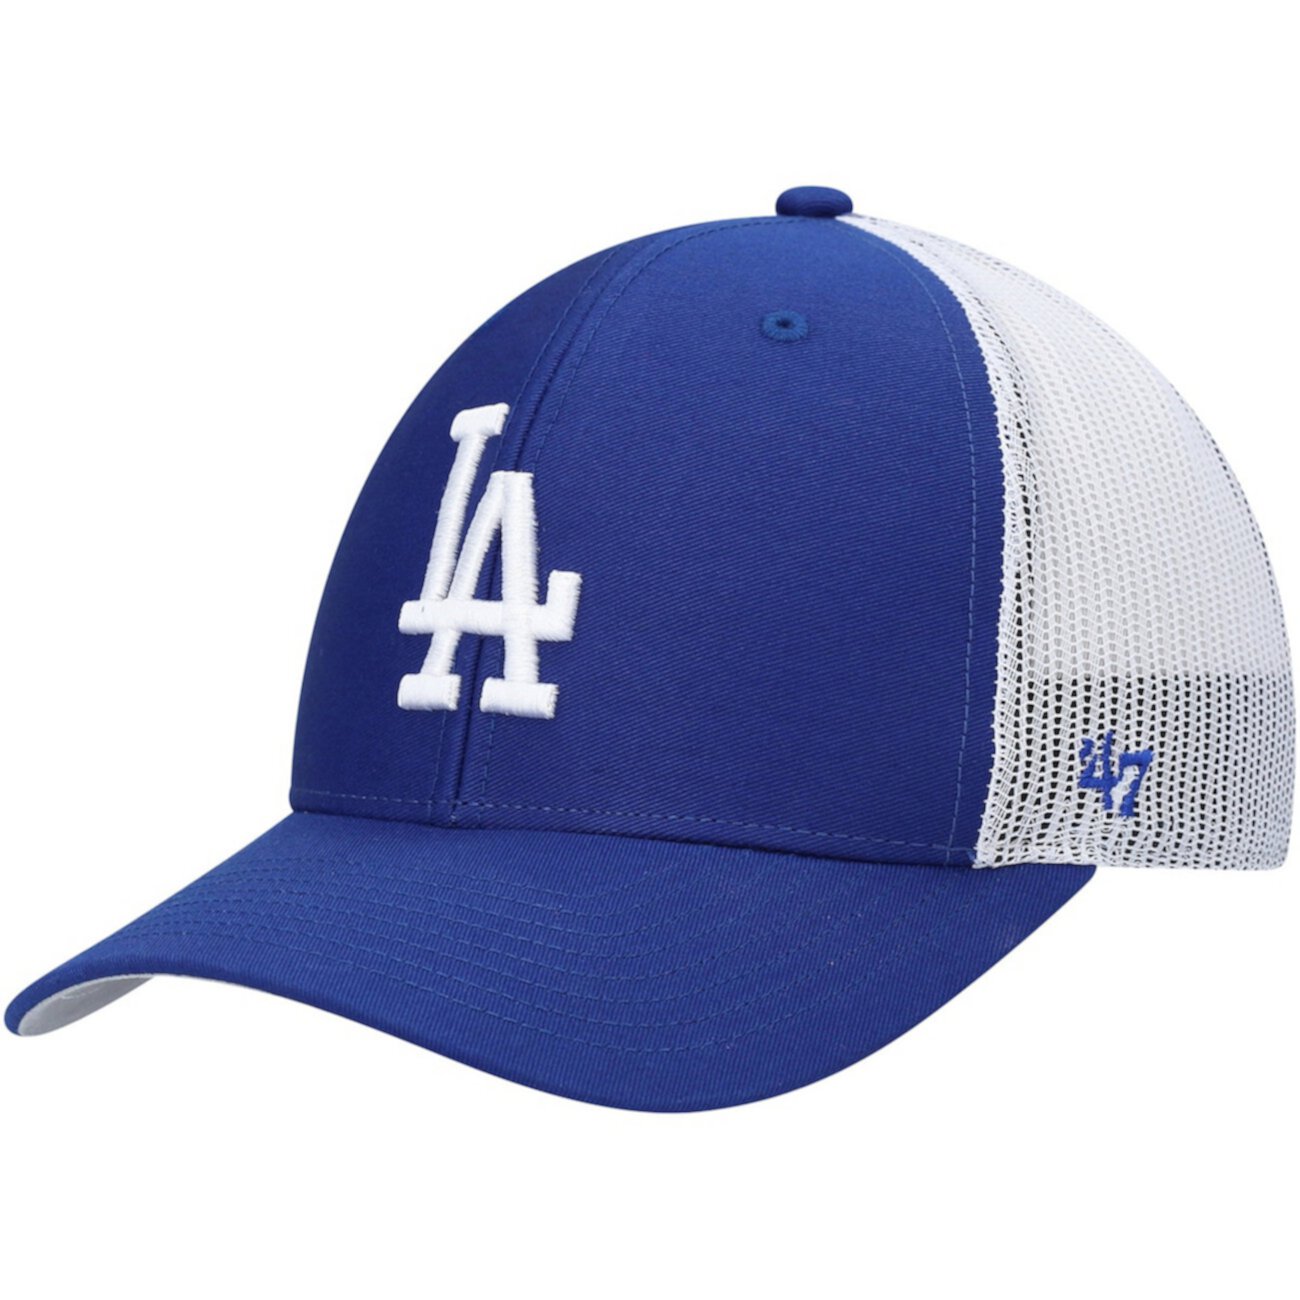 '47 Men's Royal/White Los Angeles Dodgers Primary Logo Trucker Snapback Hat '47 Brand